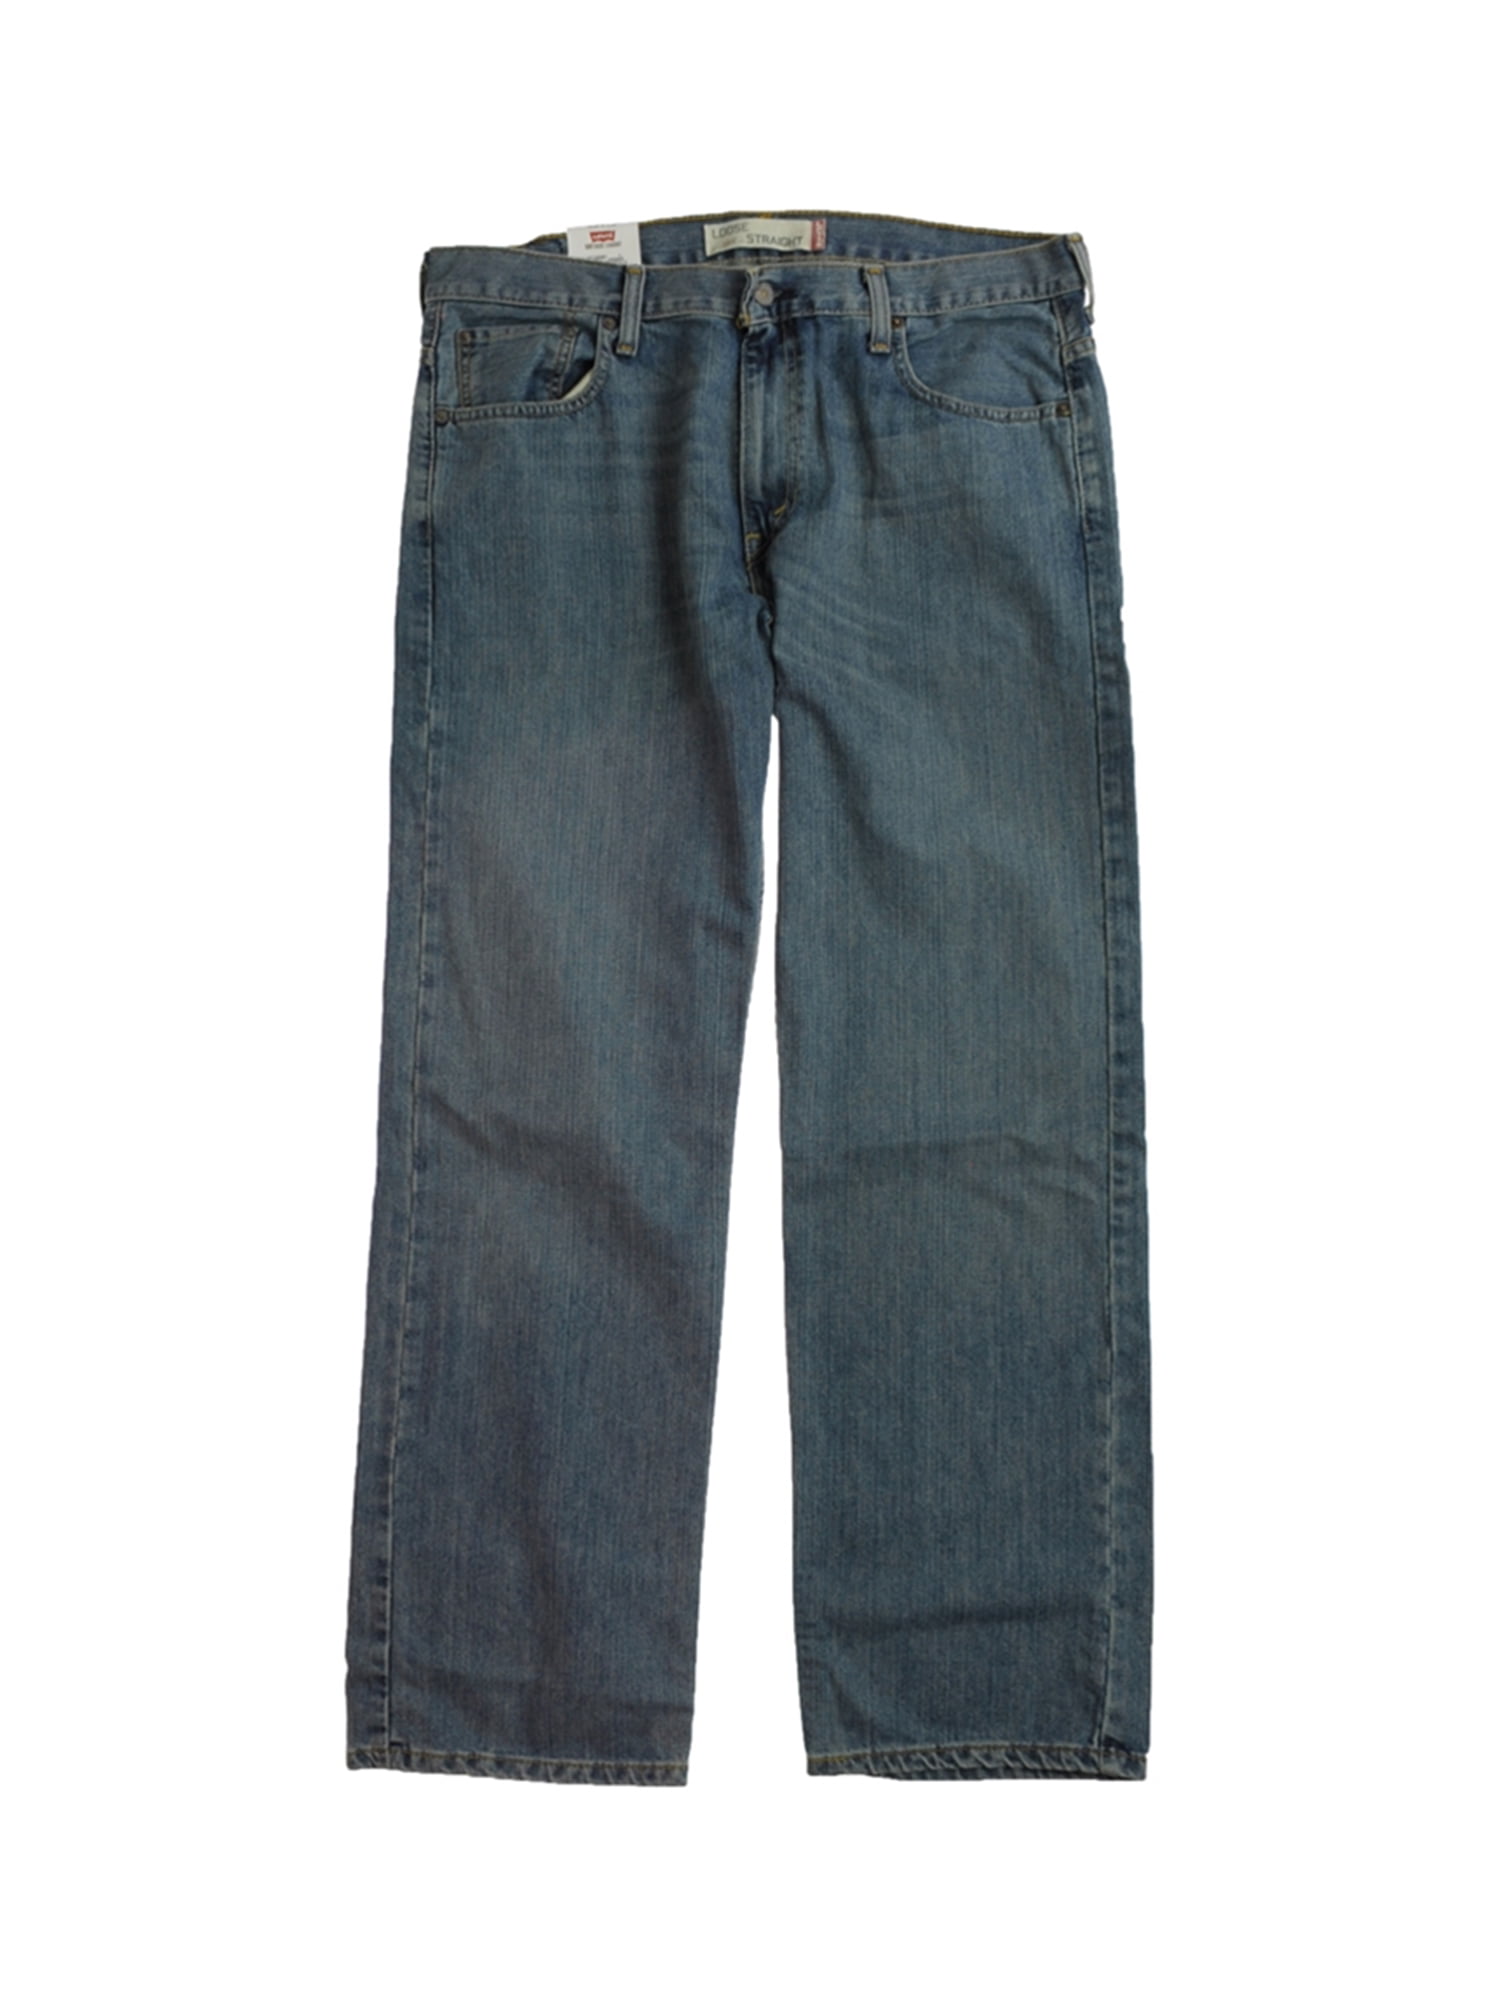 Levi's Mens 569 Loose Straight Leg Jeans lightwash 36x30 | Walmart Canada